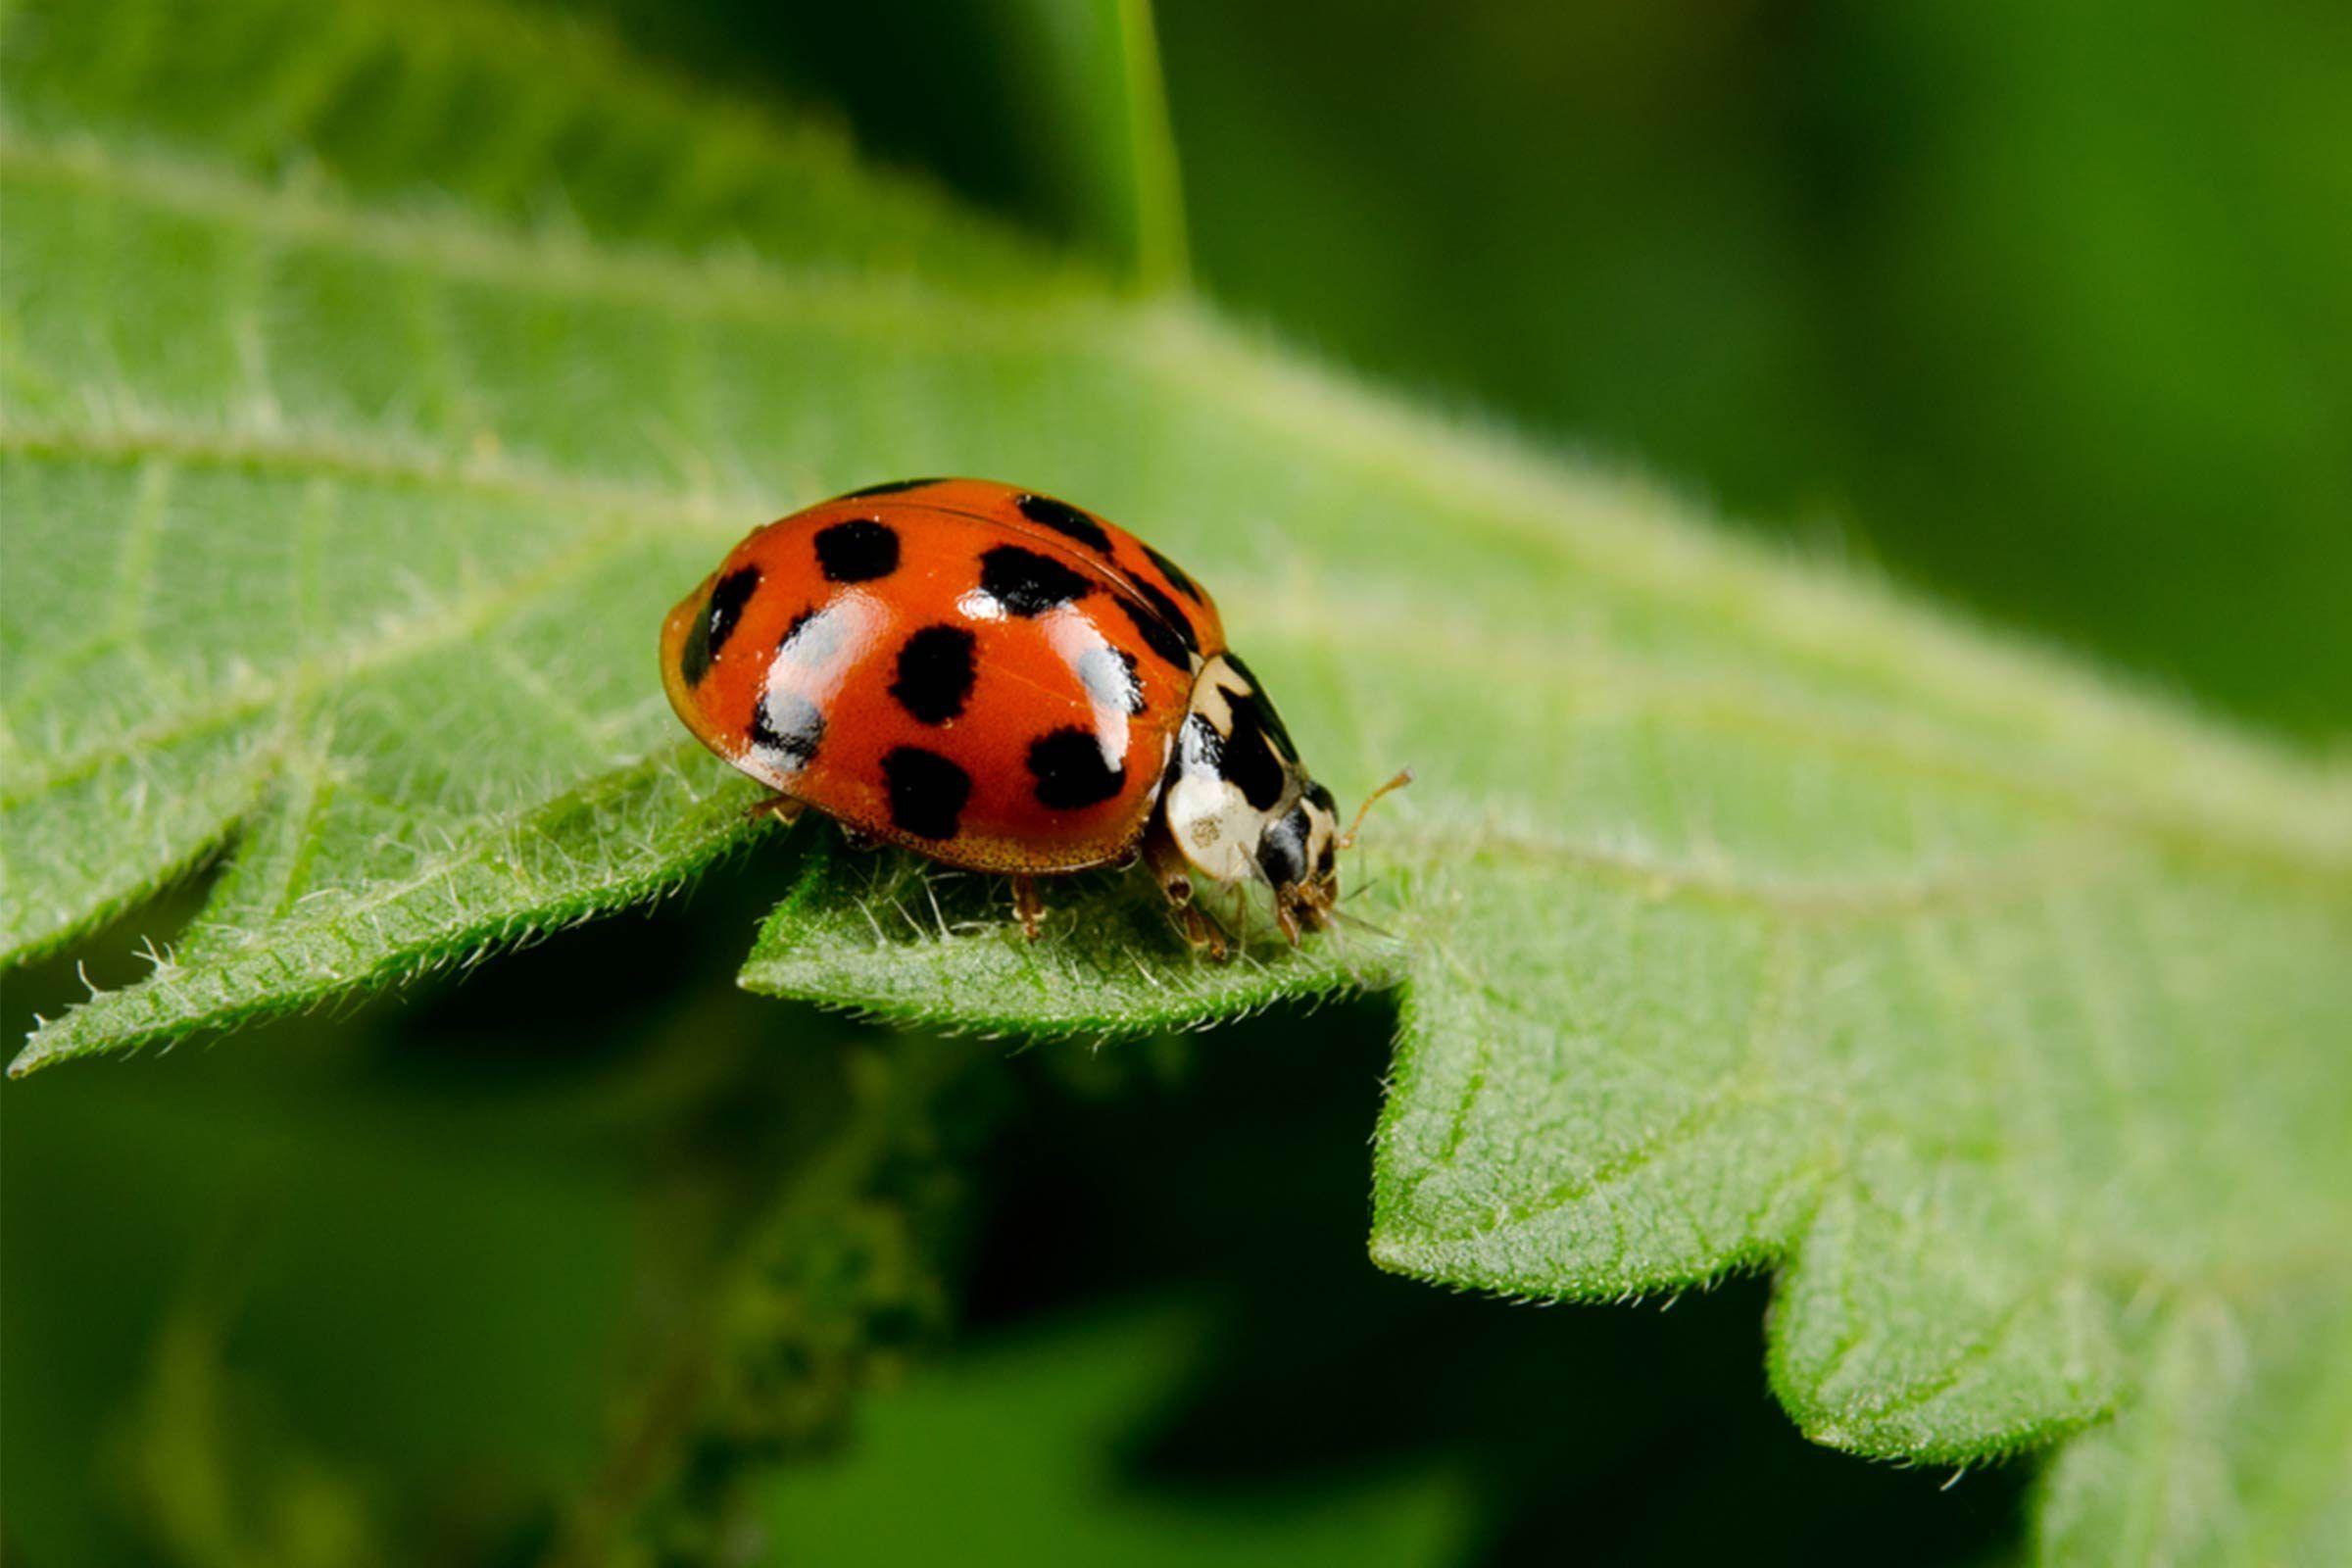 Asian ladybug recipes from around the world